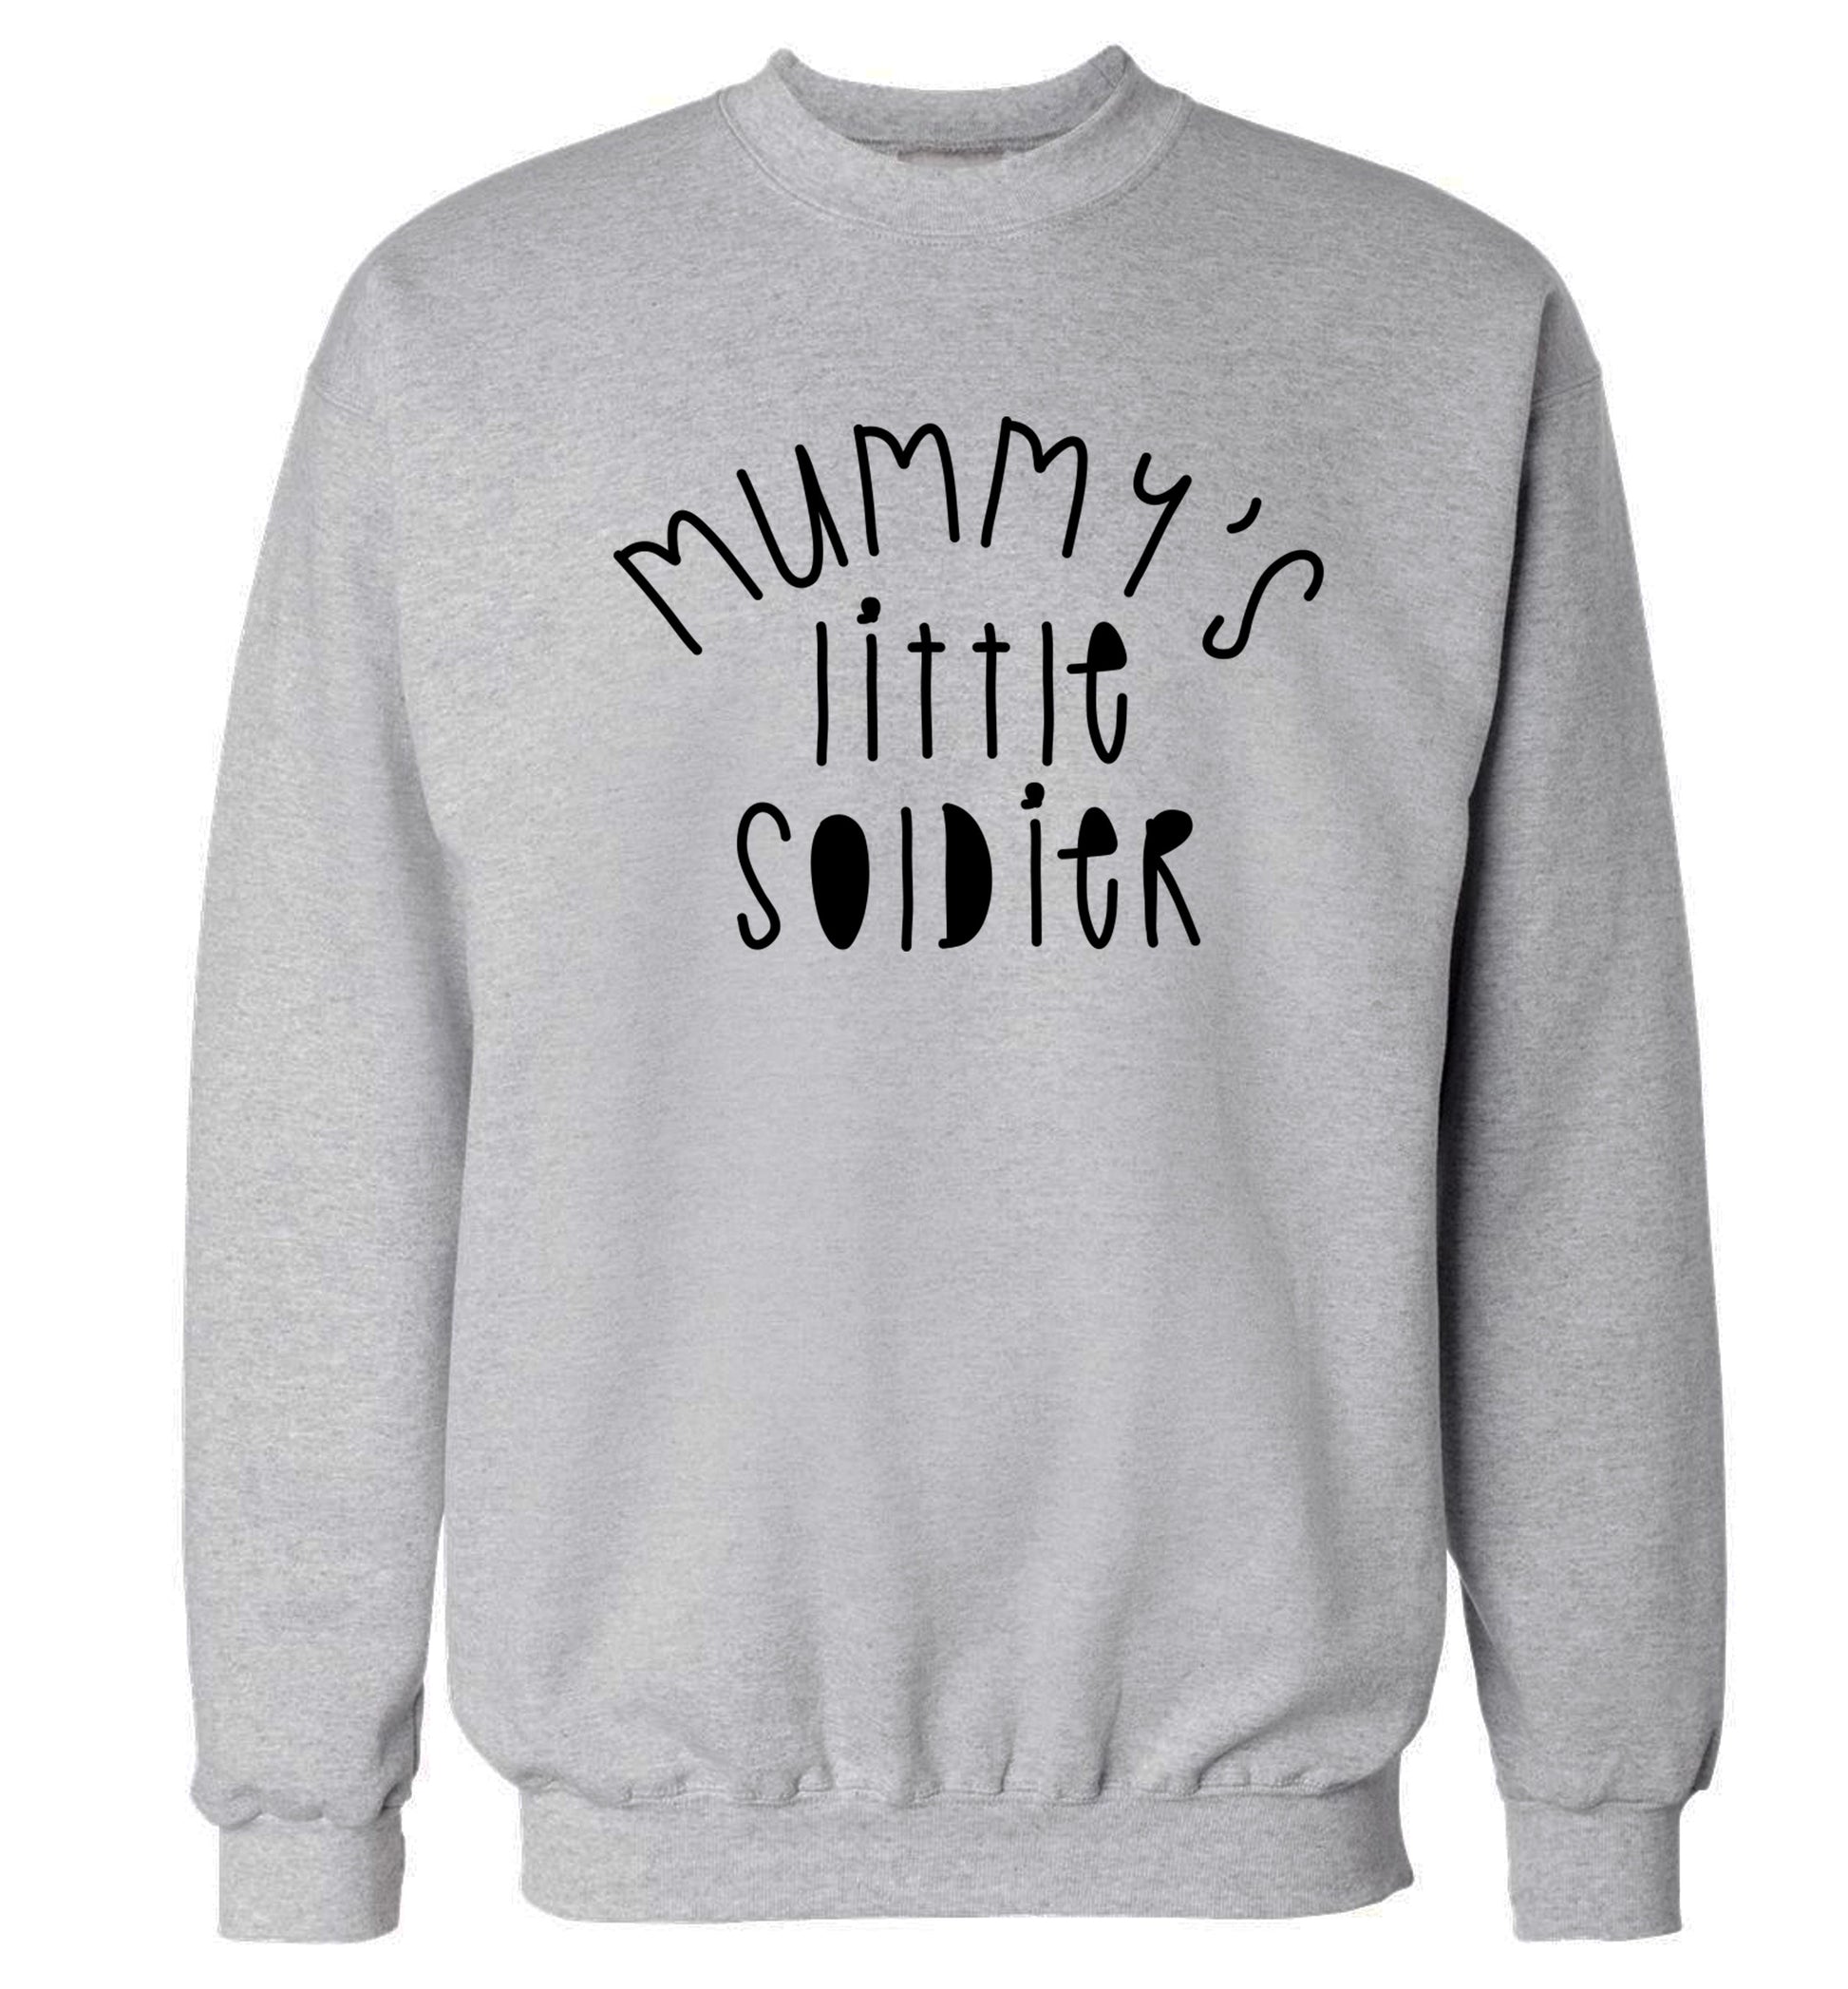 Mummy's little soldier Adult's unisex grey Sweater 2XL